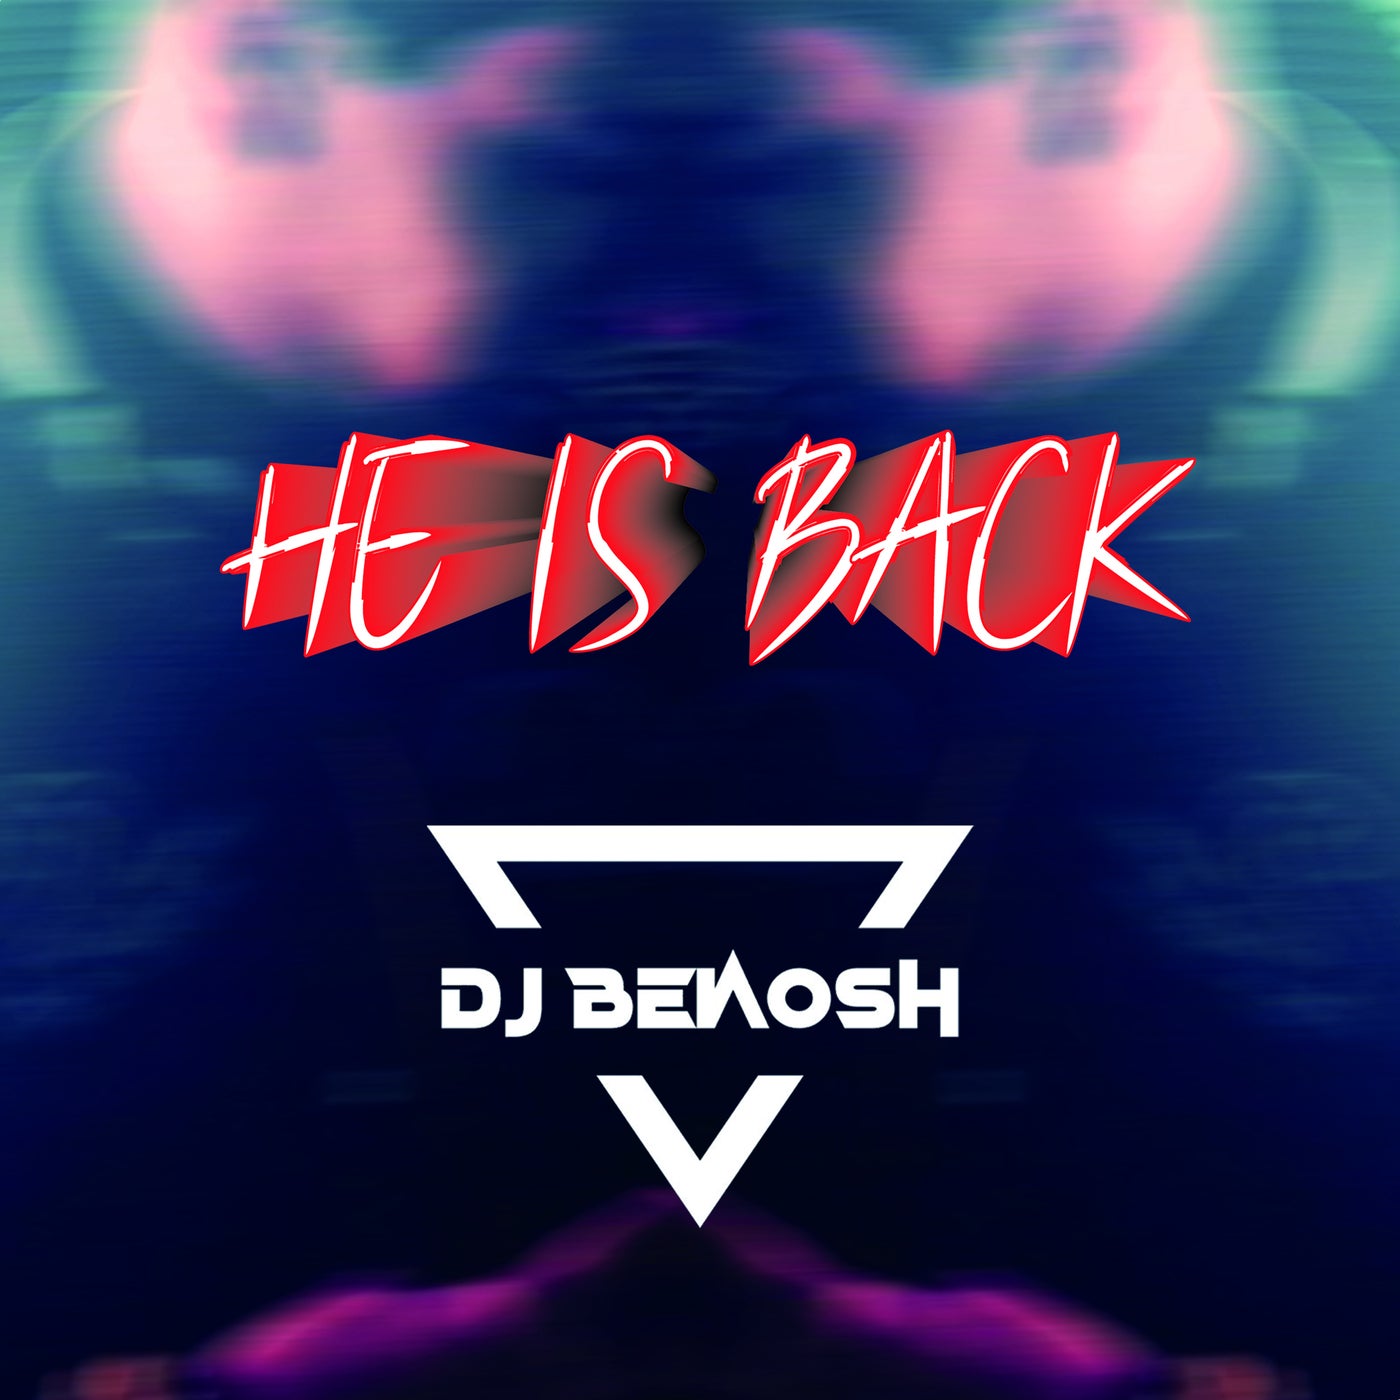 He Is Back